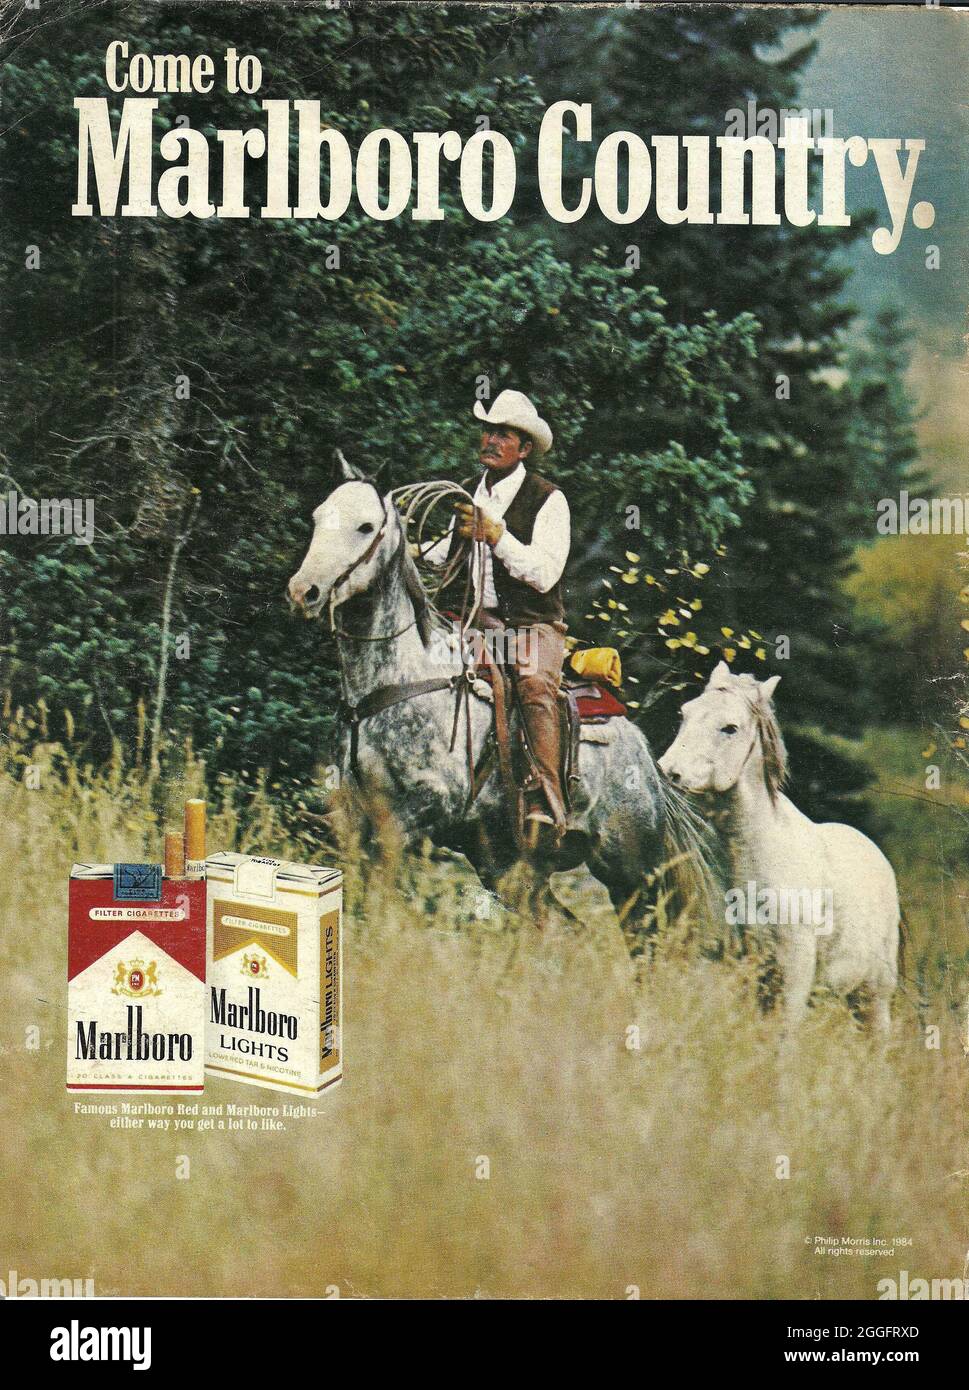 Poster advert Marlboro cigarettes Welcome to Marlboro country Philip Morris advertisement paper ad Marlboro cigarettes paper advert ad advertisement Stock Photo